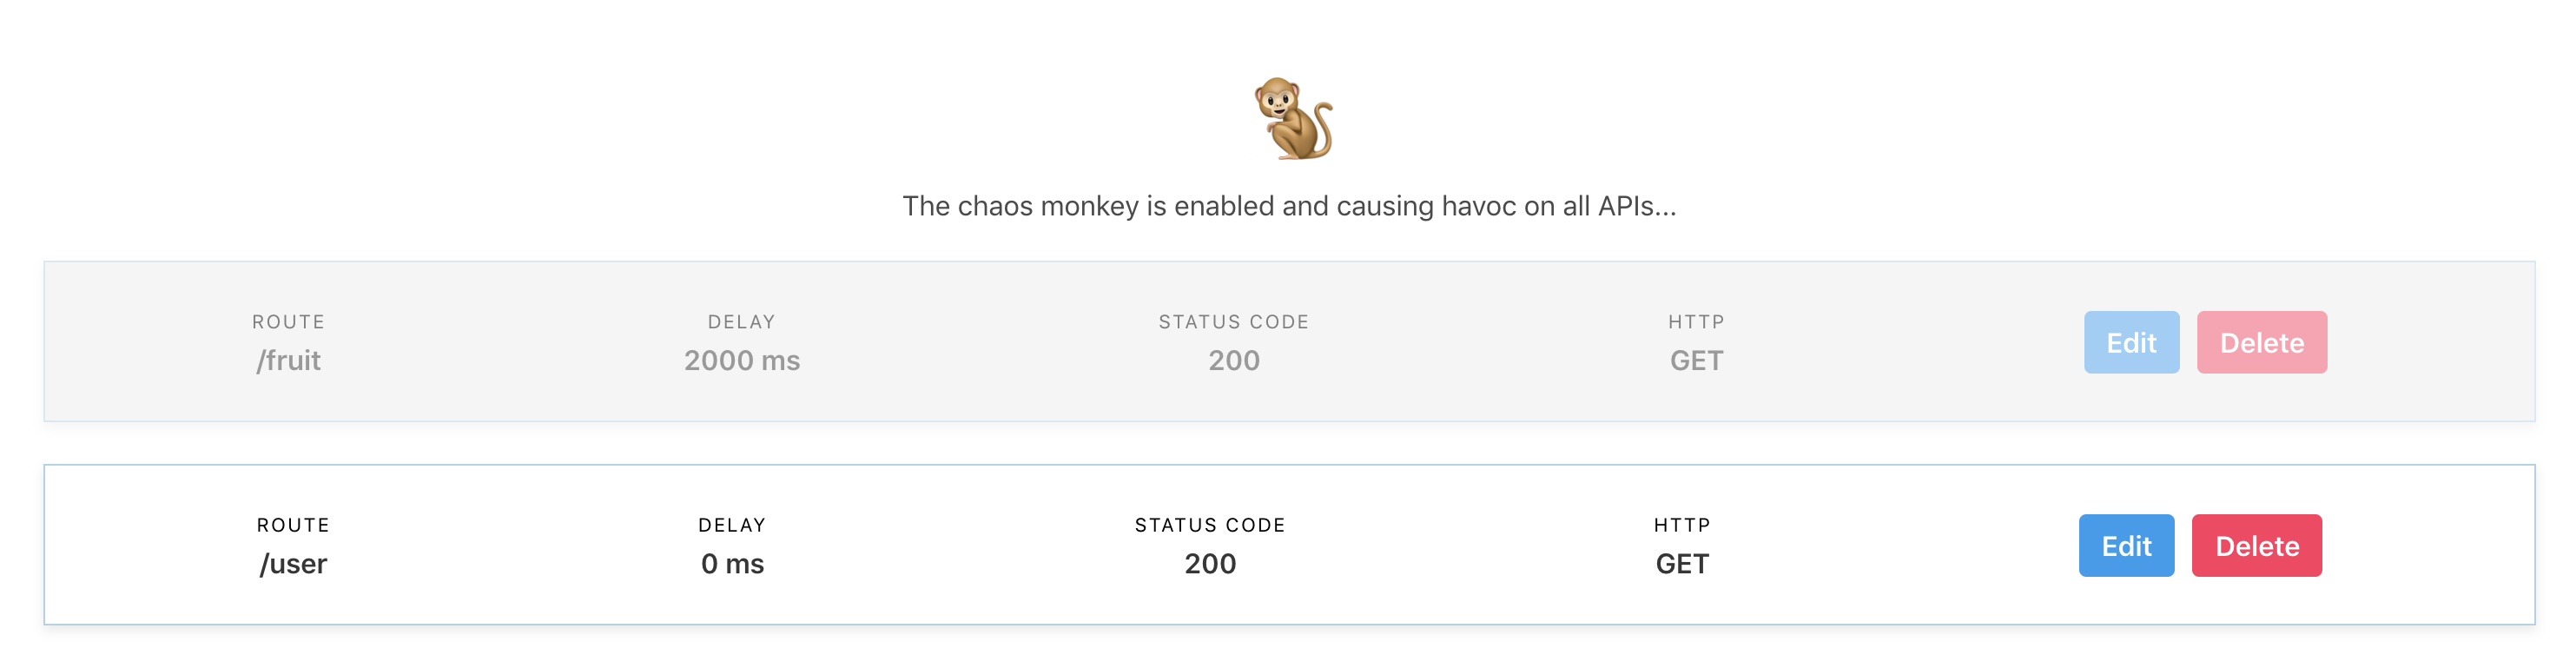 Monkey feature UI